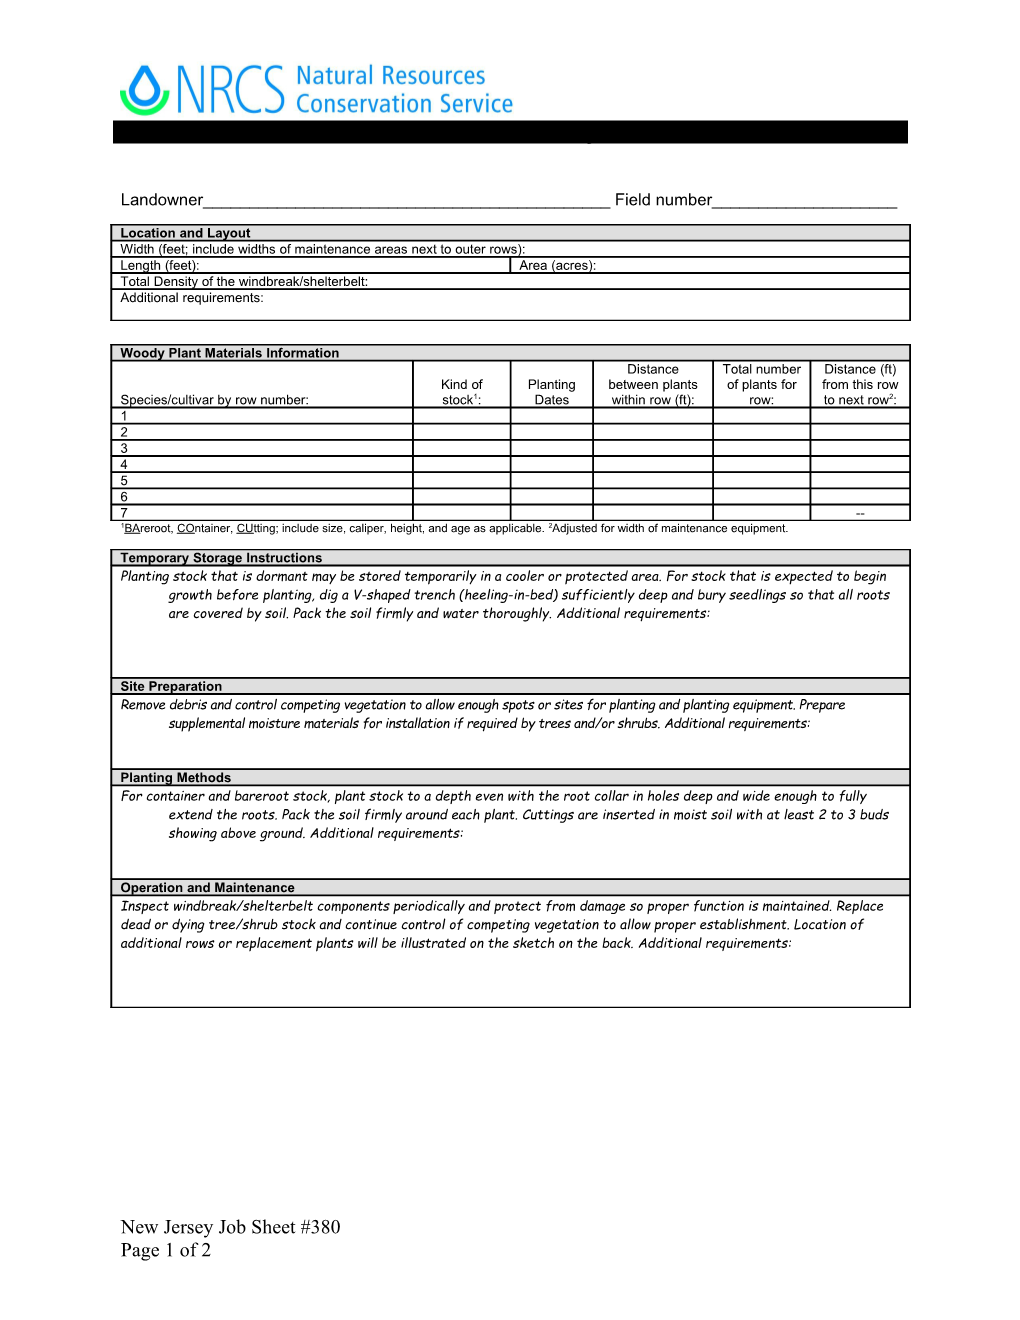 Windbreak/Shelterbelt Maintencance 380 Job Sheet